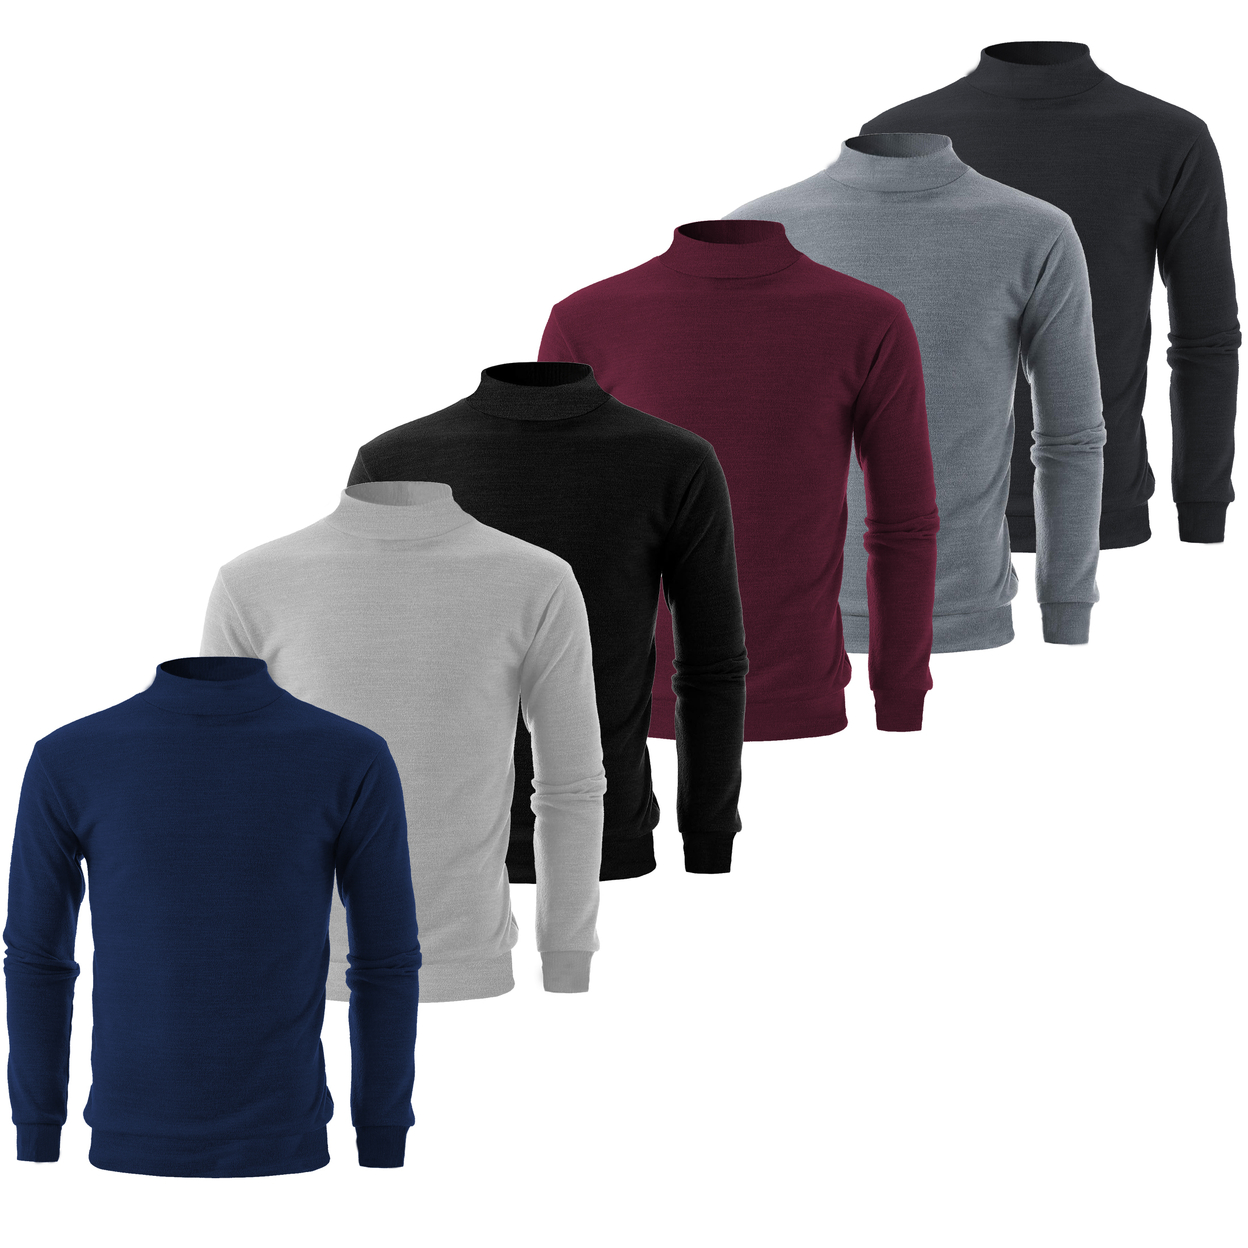 Multi-Pack: Men's Winter Warm Cozy Knit Slim Fit Mock Neck Sweater - 1-pack, Xx-large